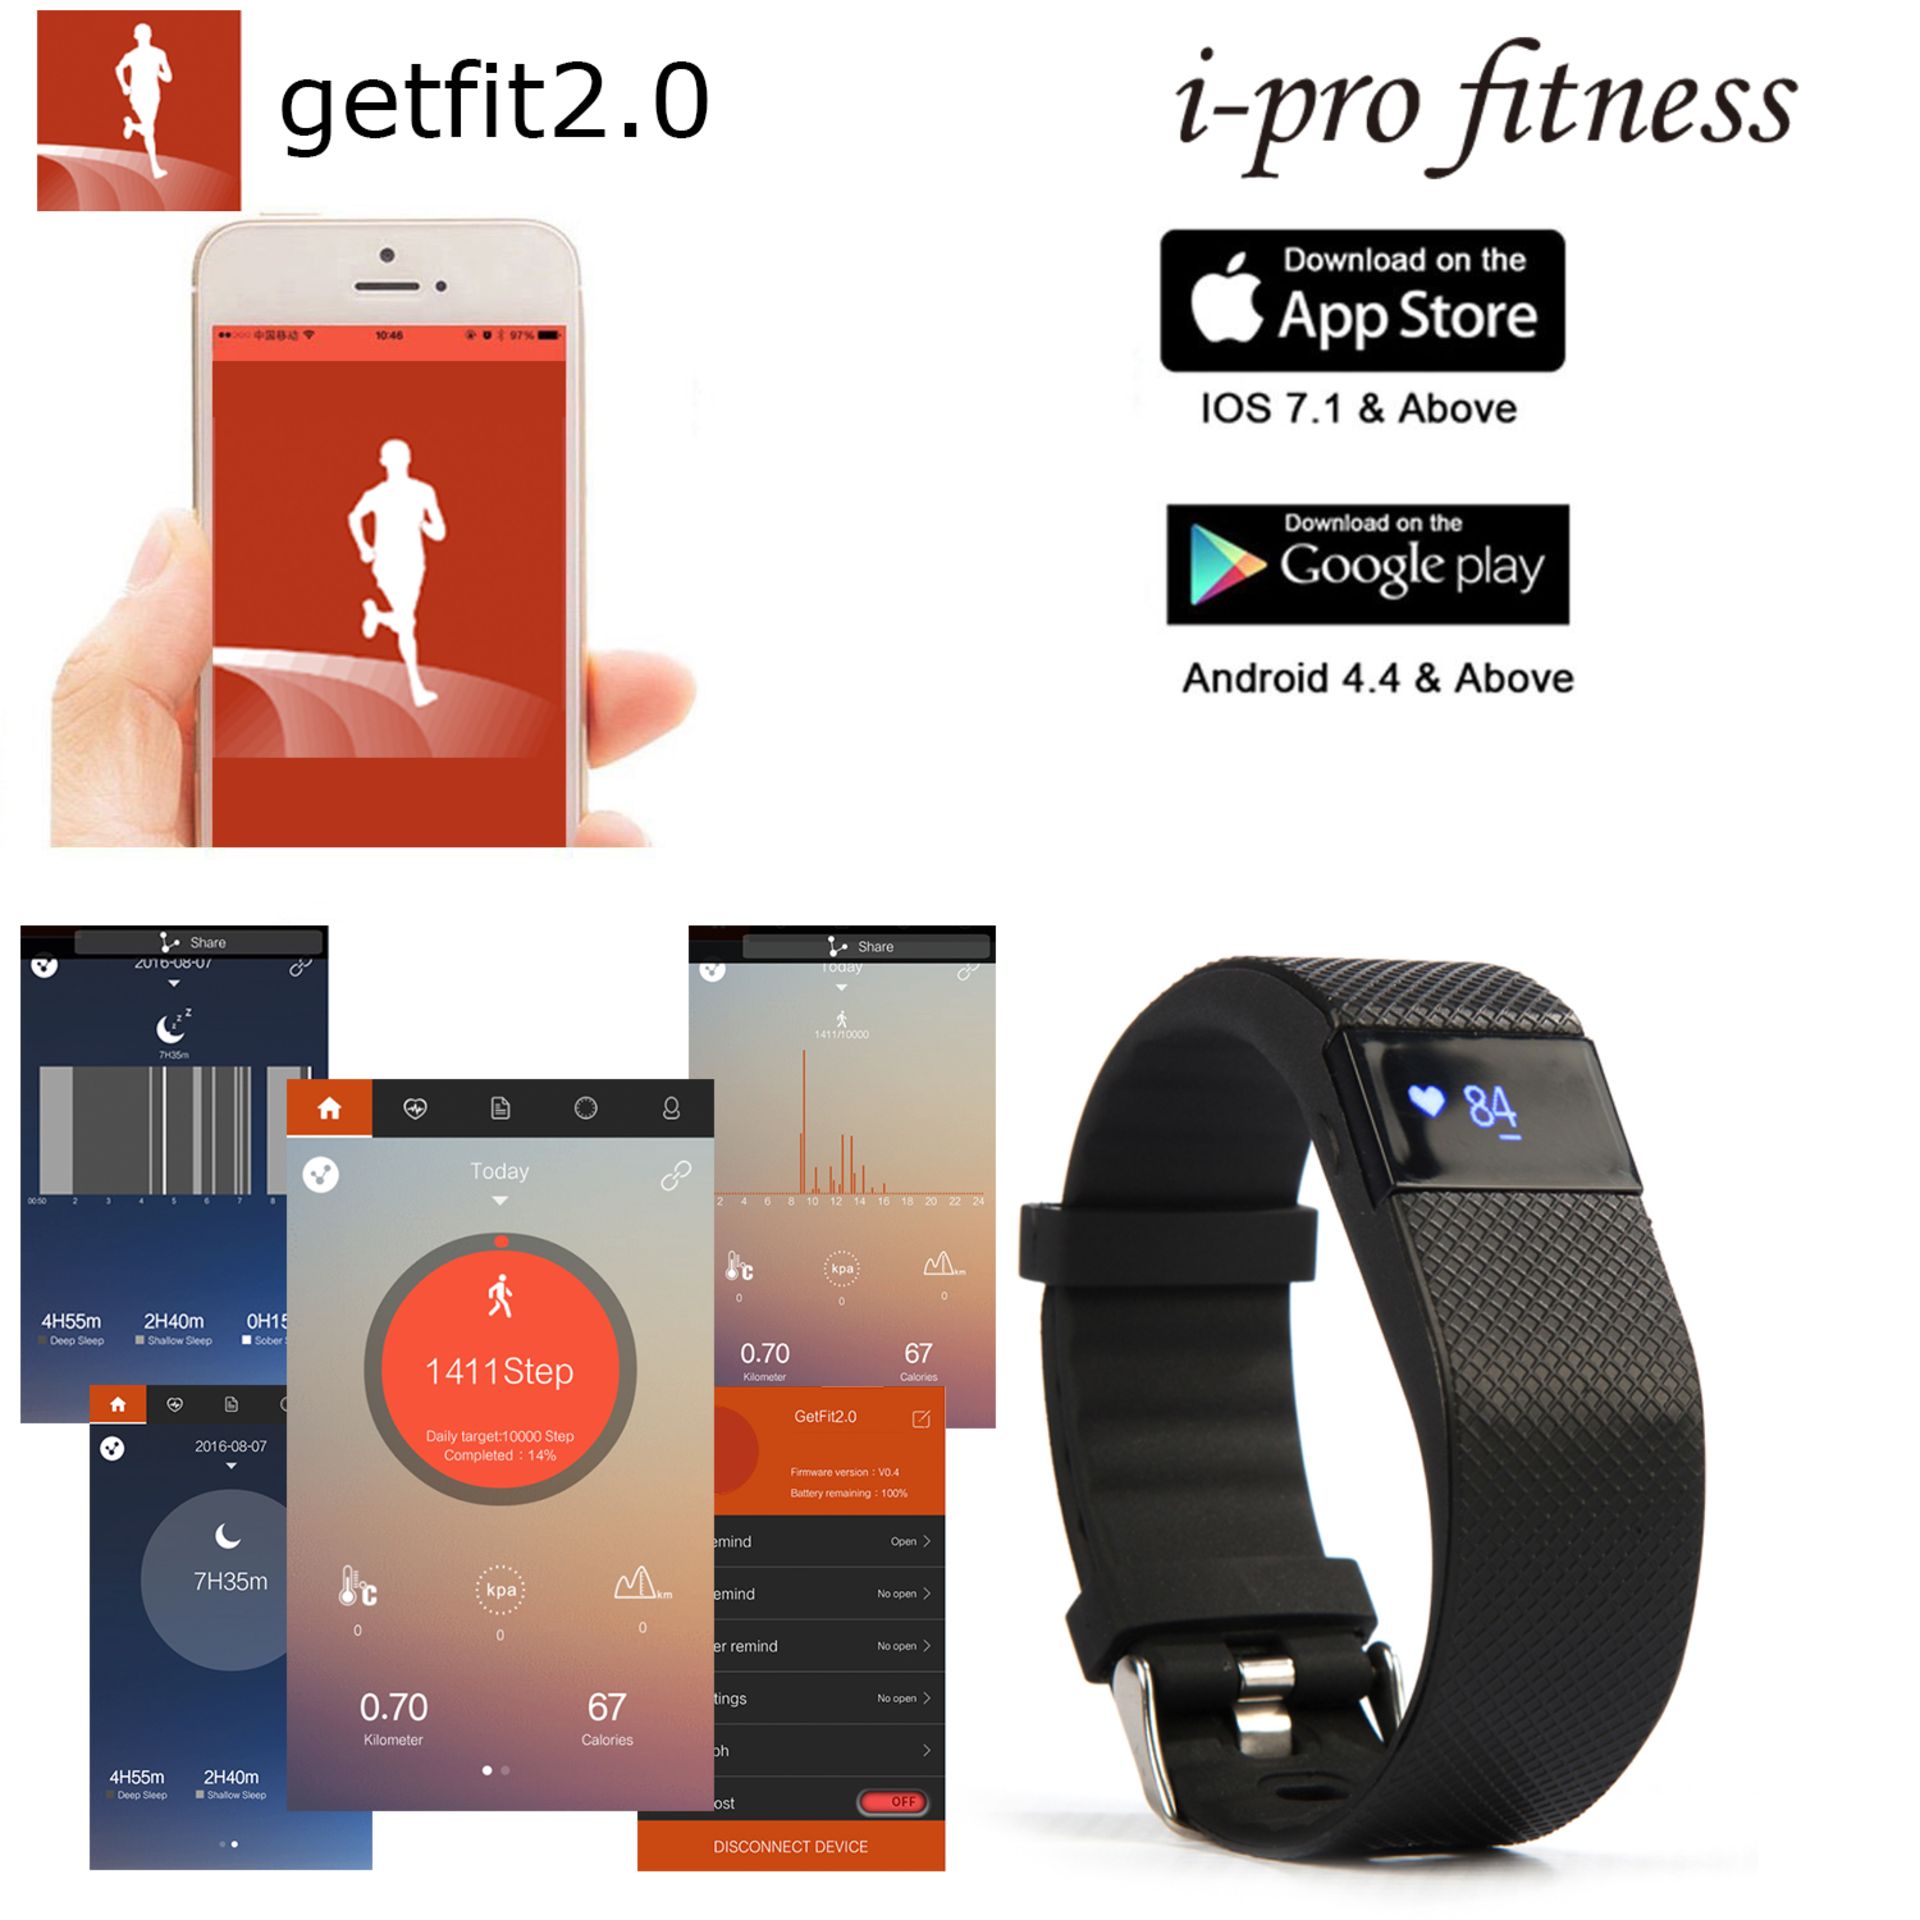 Fitness Tracker i-pro fitness, Bluetooth 4.0 Sports Smart Bracelet, Heart Rate Monitor & Pedometer. - Image 2 of 8